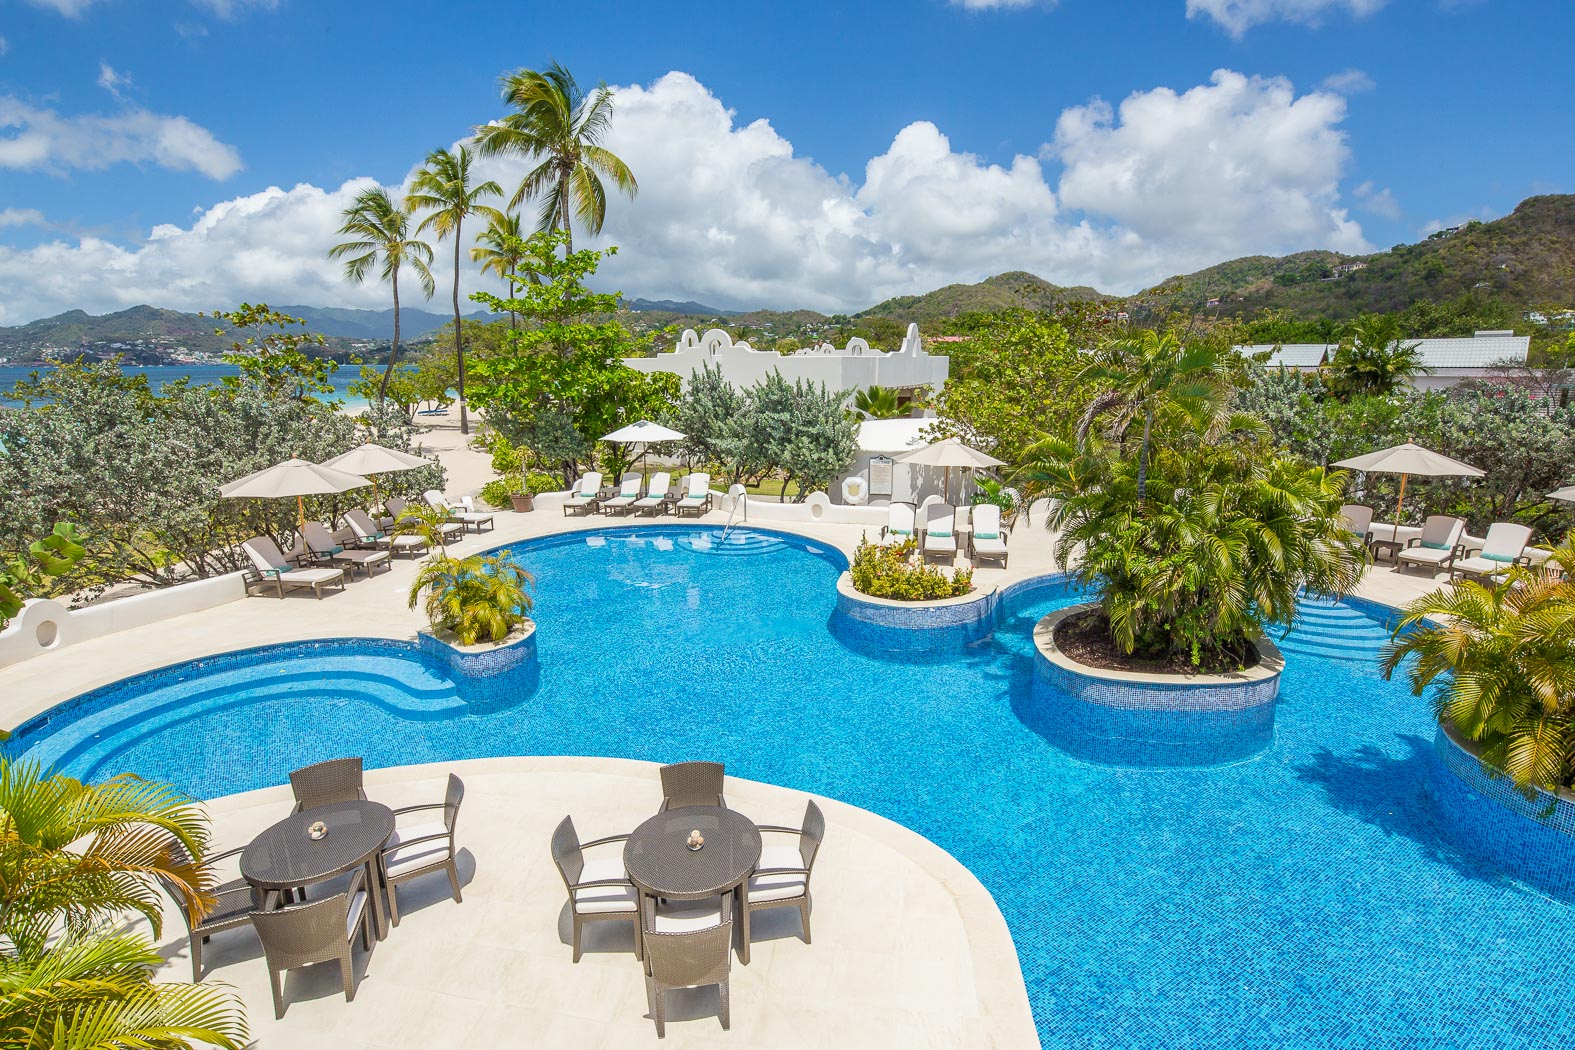 Spice Island Beach Resort An AllInclusive Resort in Grenada, W.I.